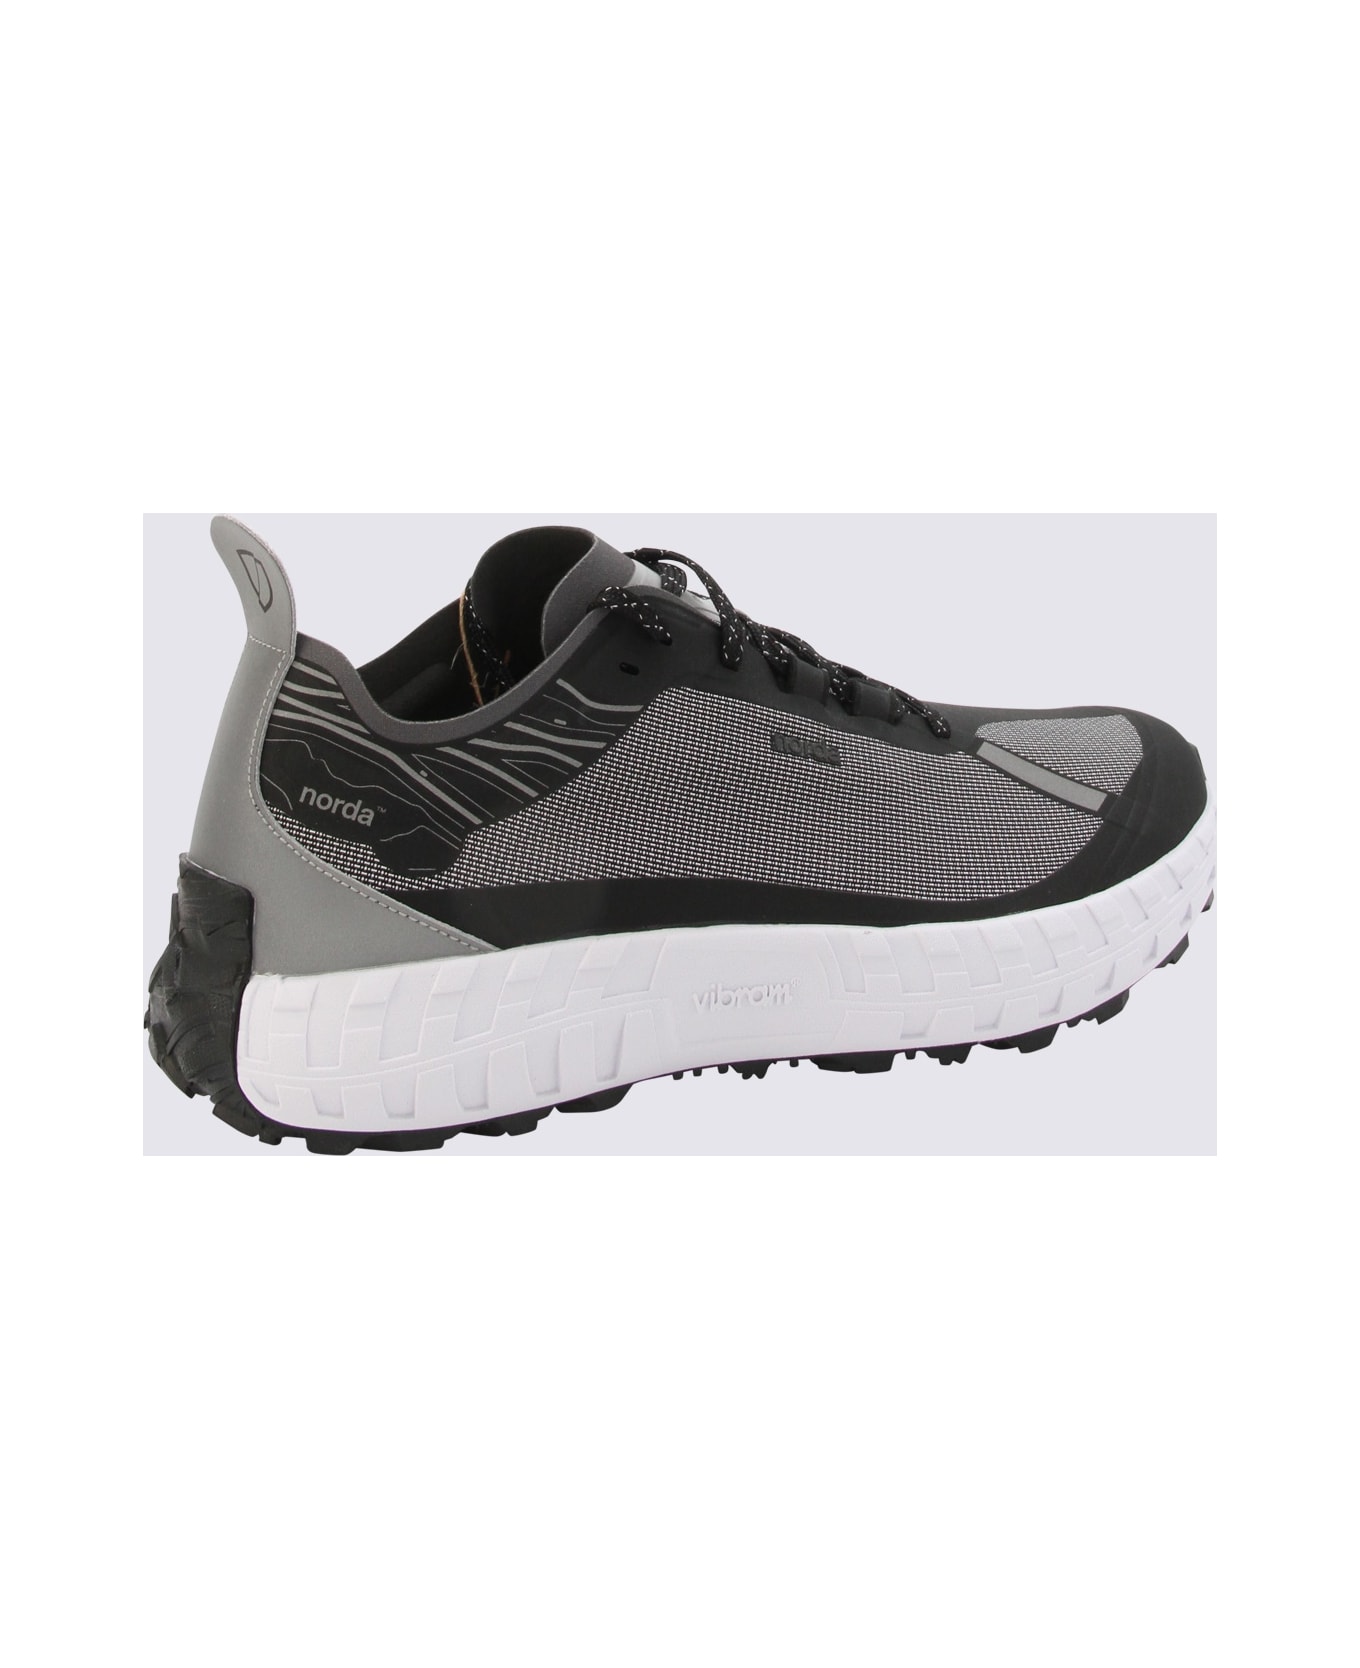 Norda Grey The 001 W Blk Sneakers - Black